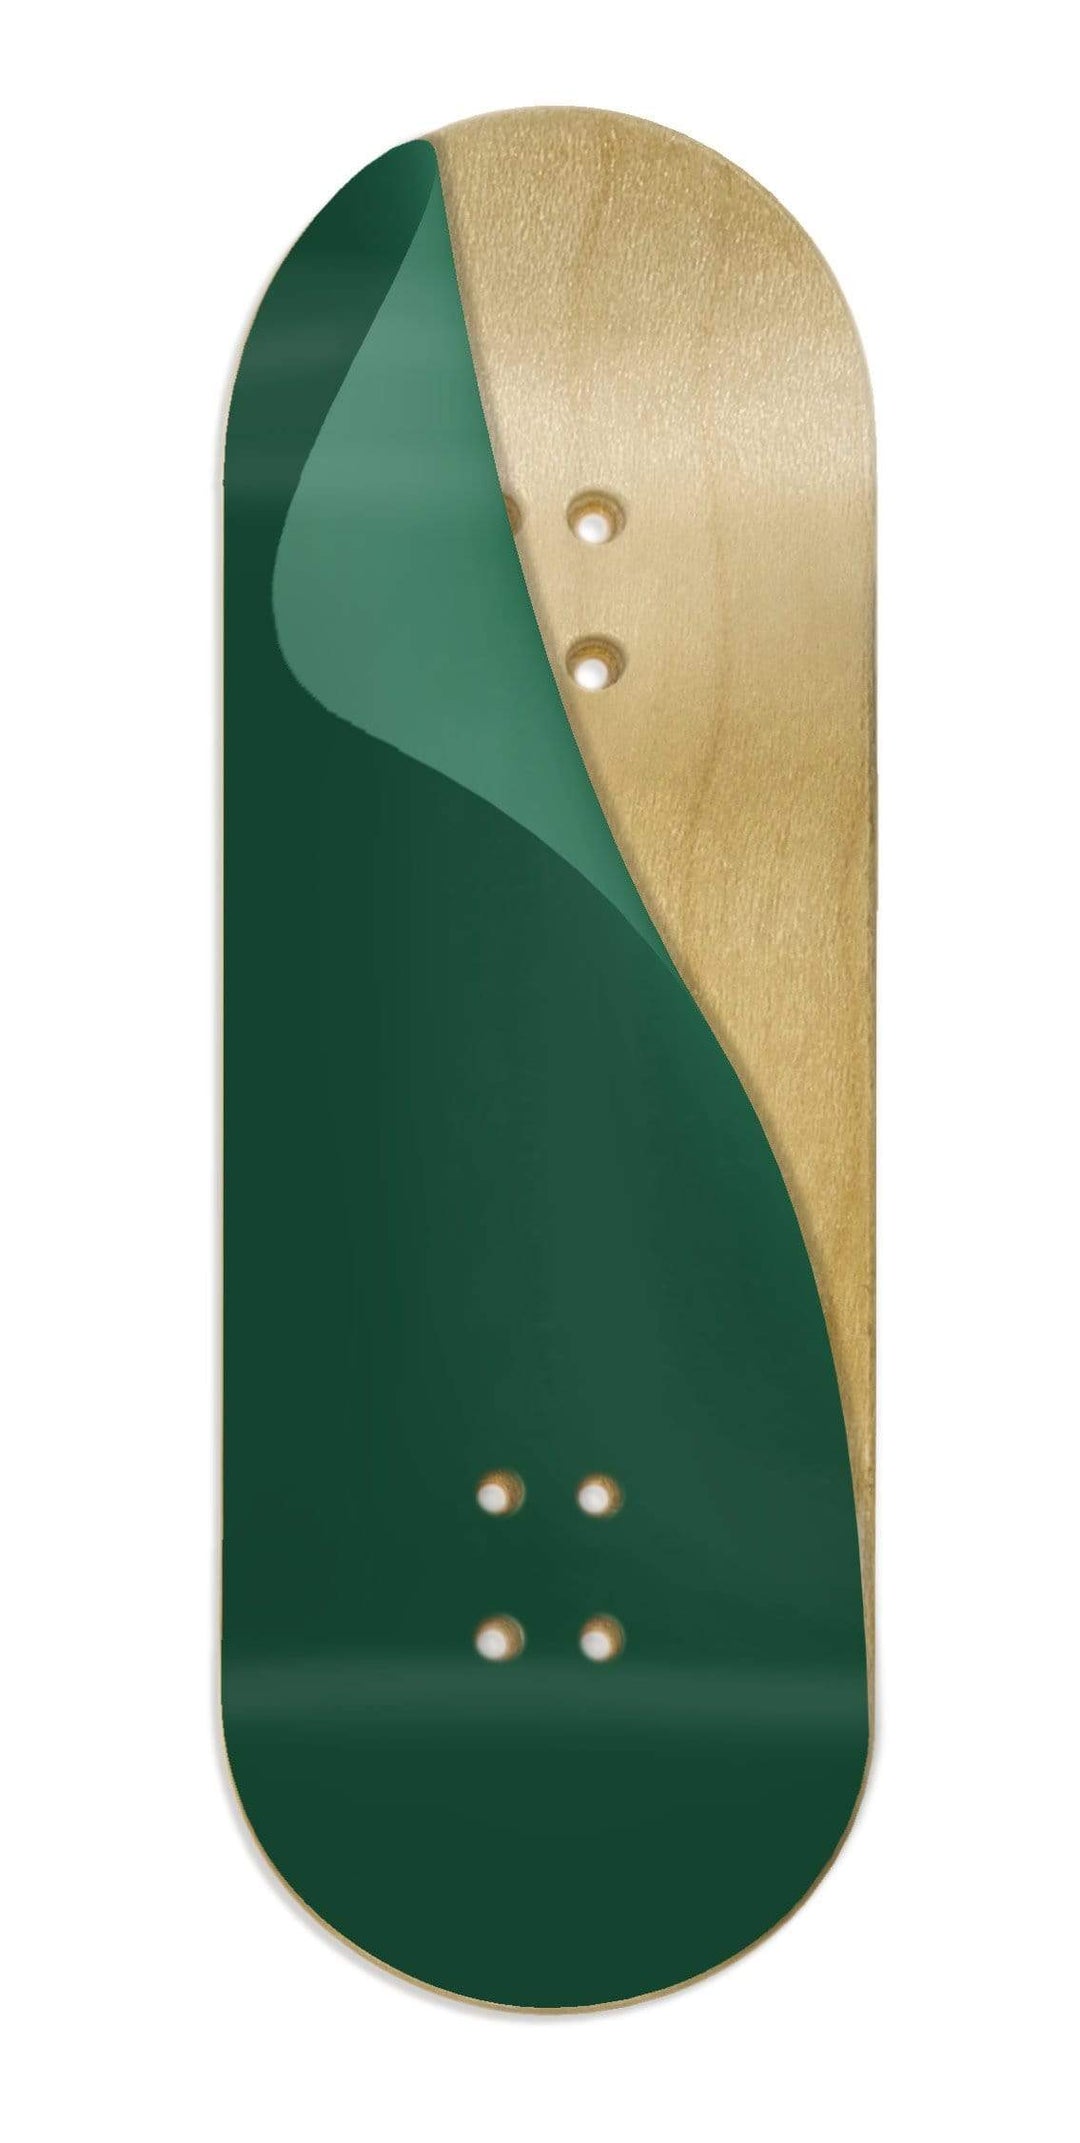 Teak Tuning Teak Swap Fingerboard Deck & ColorBlock Wrap - "Emerald Green" - 32mm x 97mm